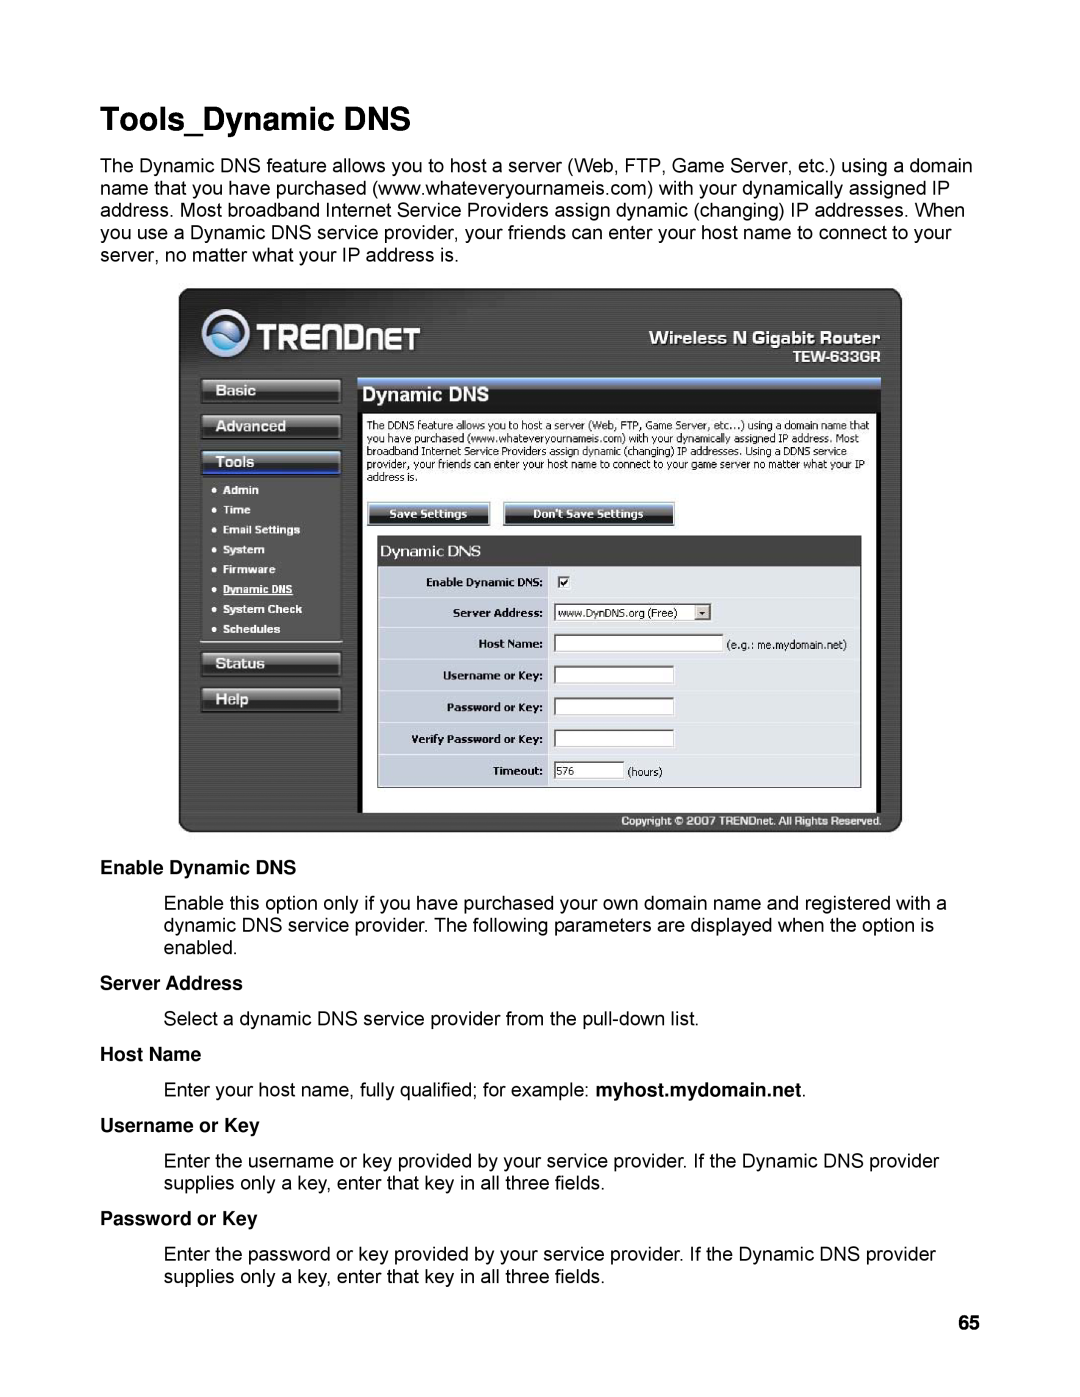 TRENDnet TEW-633GR manual ToolsDynamic DNS, Enable Dynamic DNS, Server Address, Host Name, Username or Key, Password or Key 